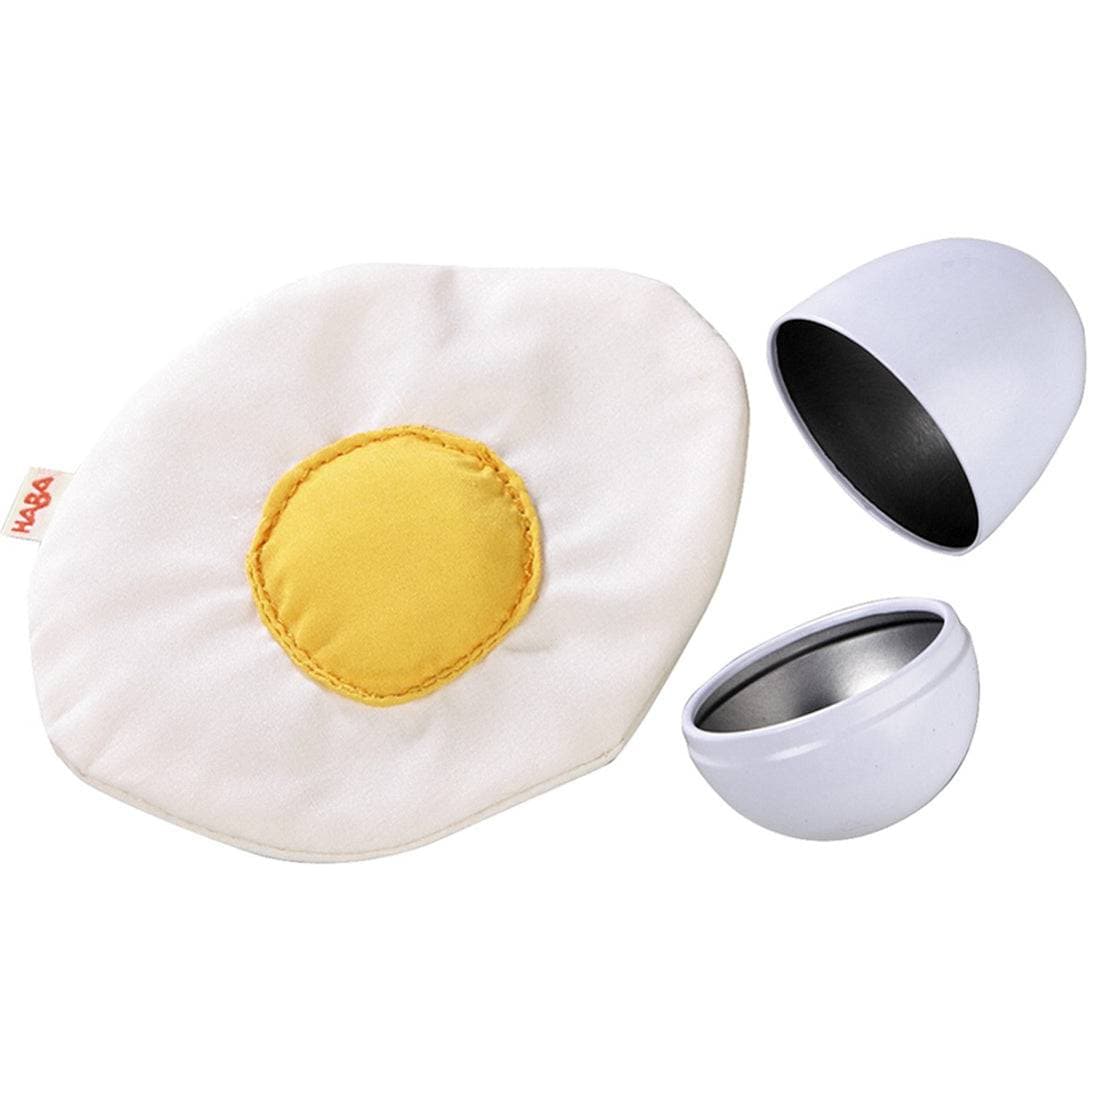 Biofino Fried Egg with Metal Shell Soft Play Food - HABA USA